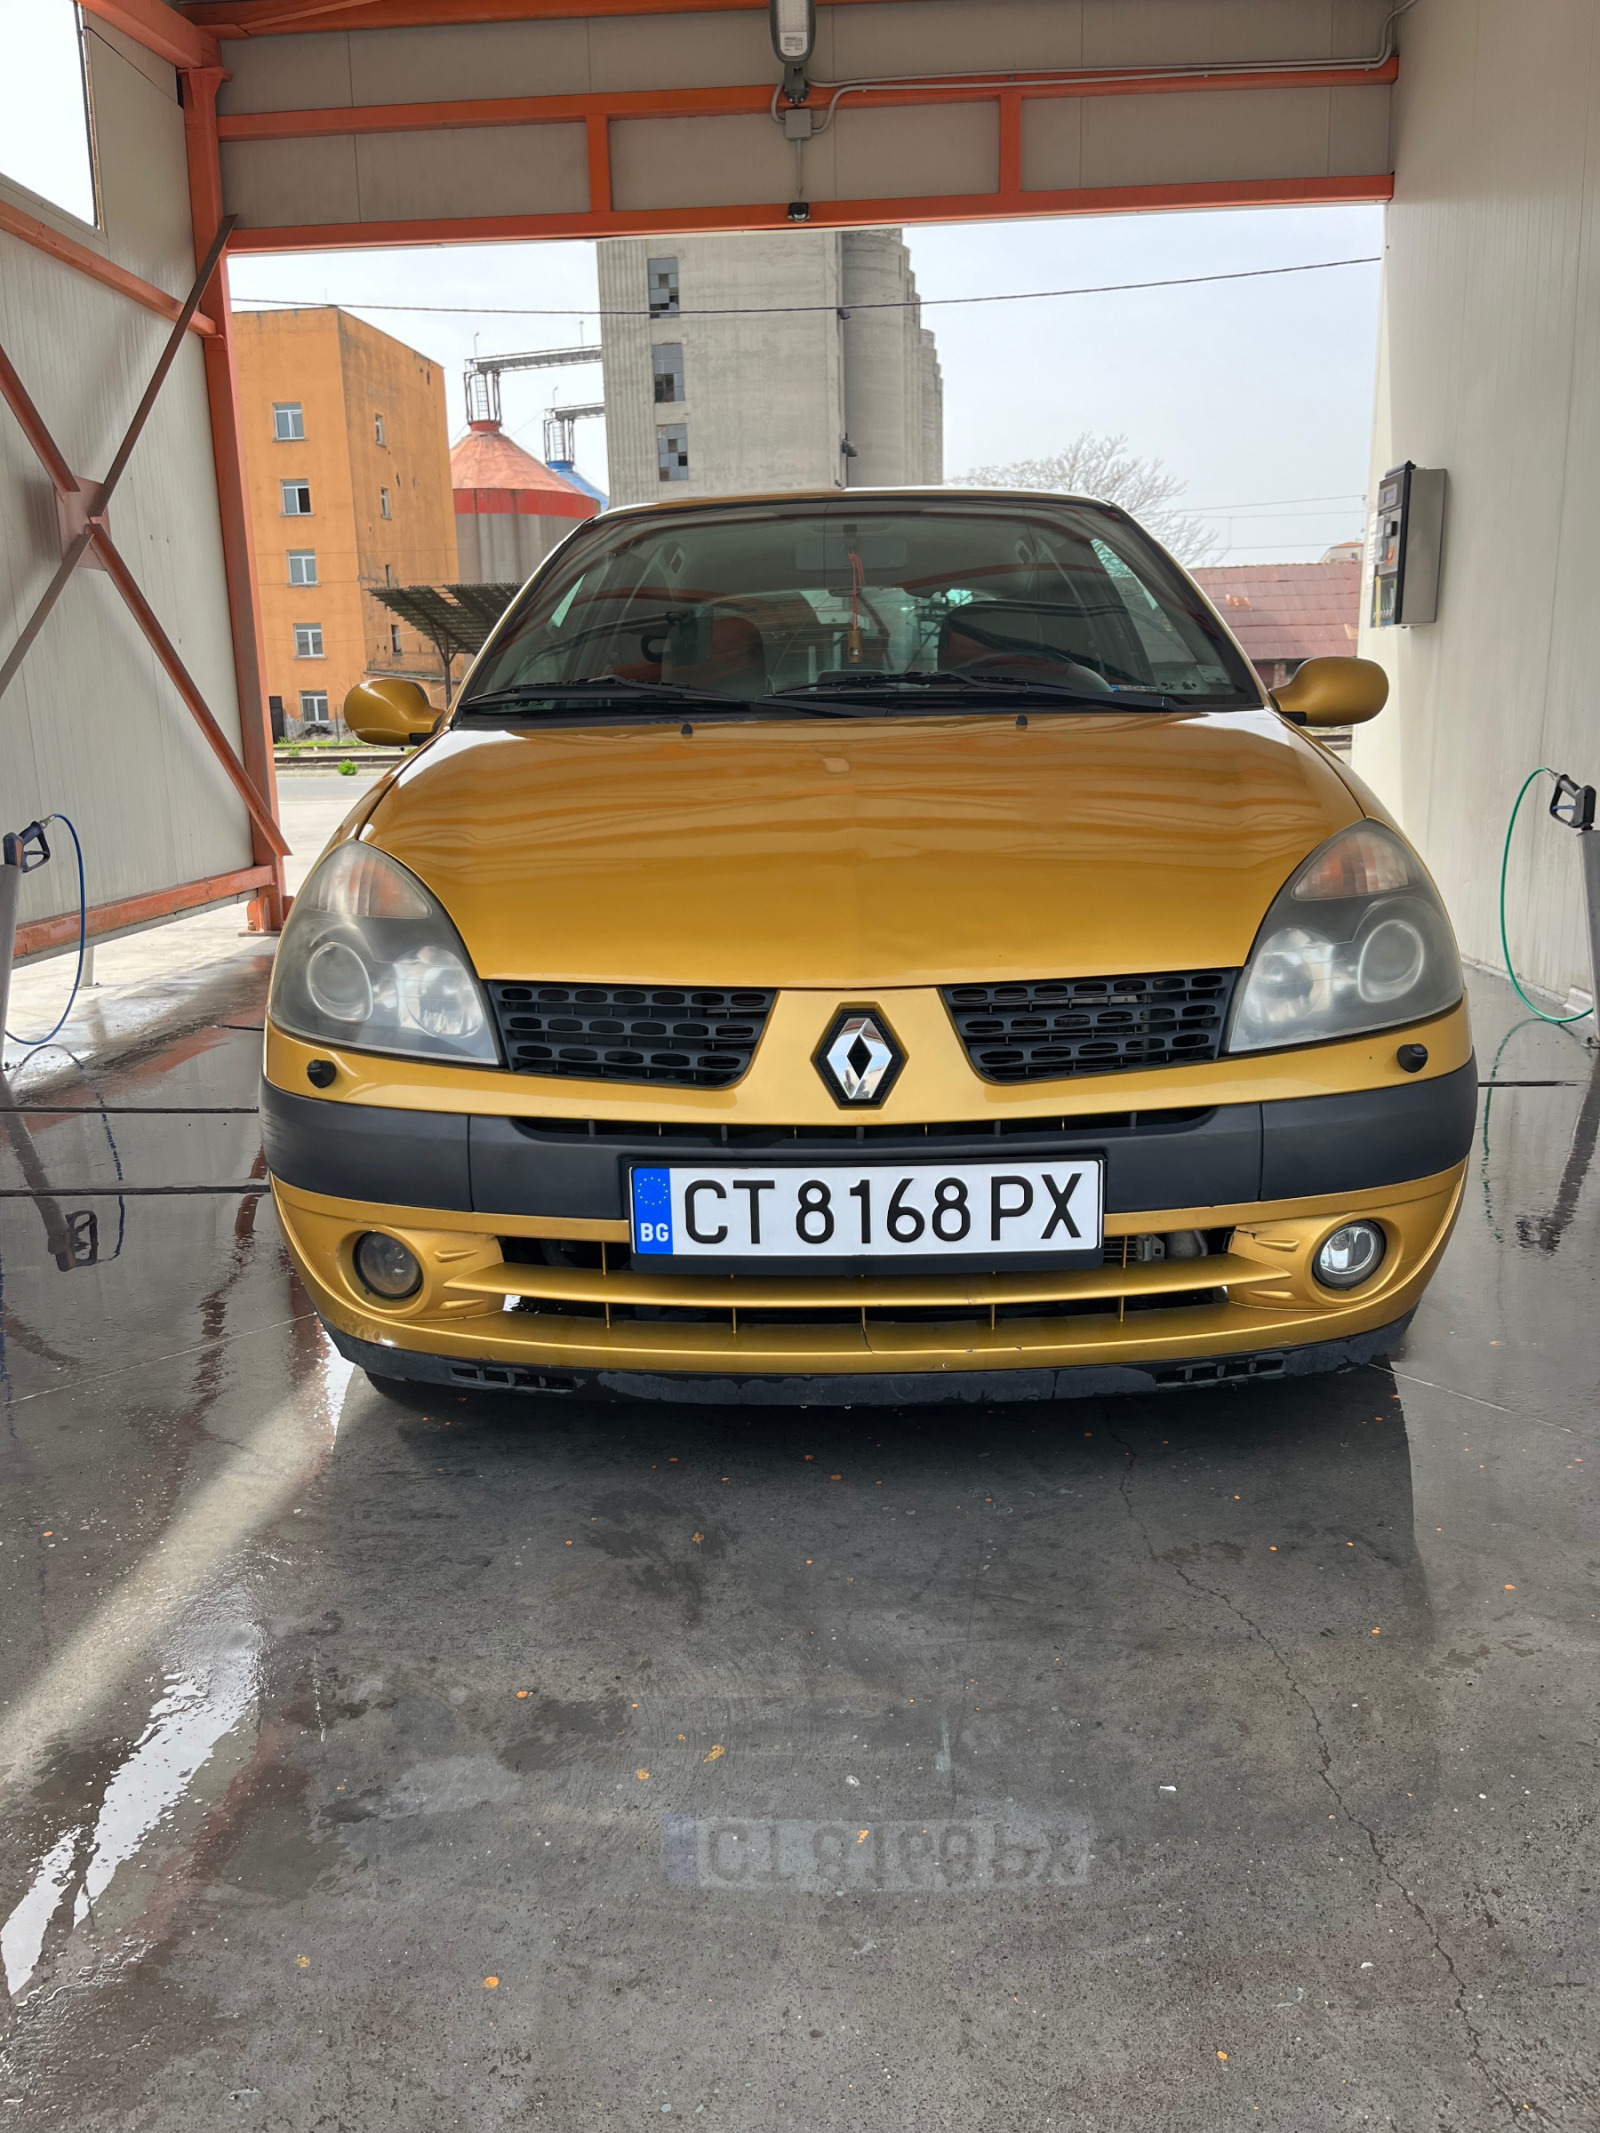 Renault Clio 1.4 16v - изображение 1